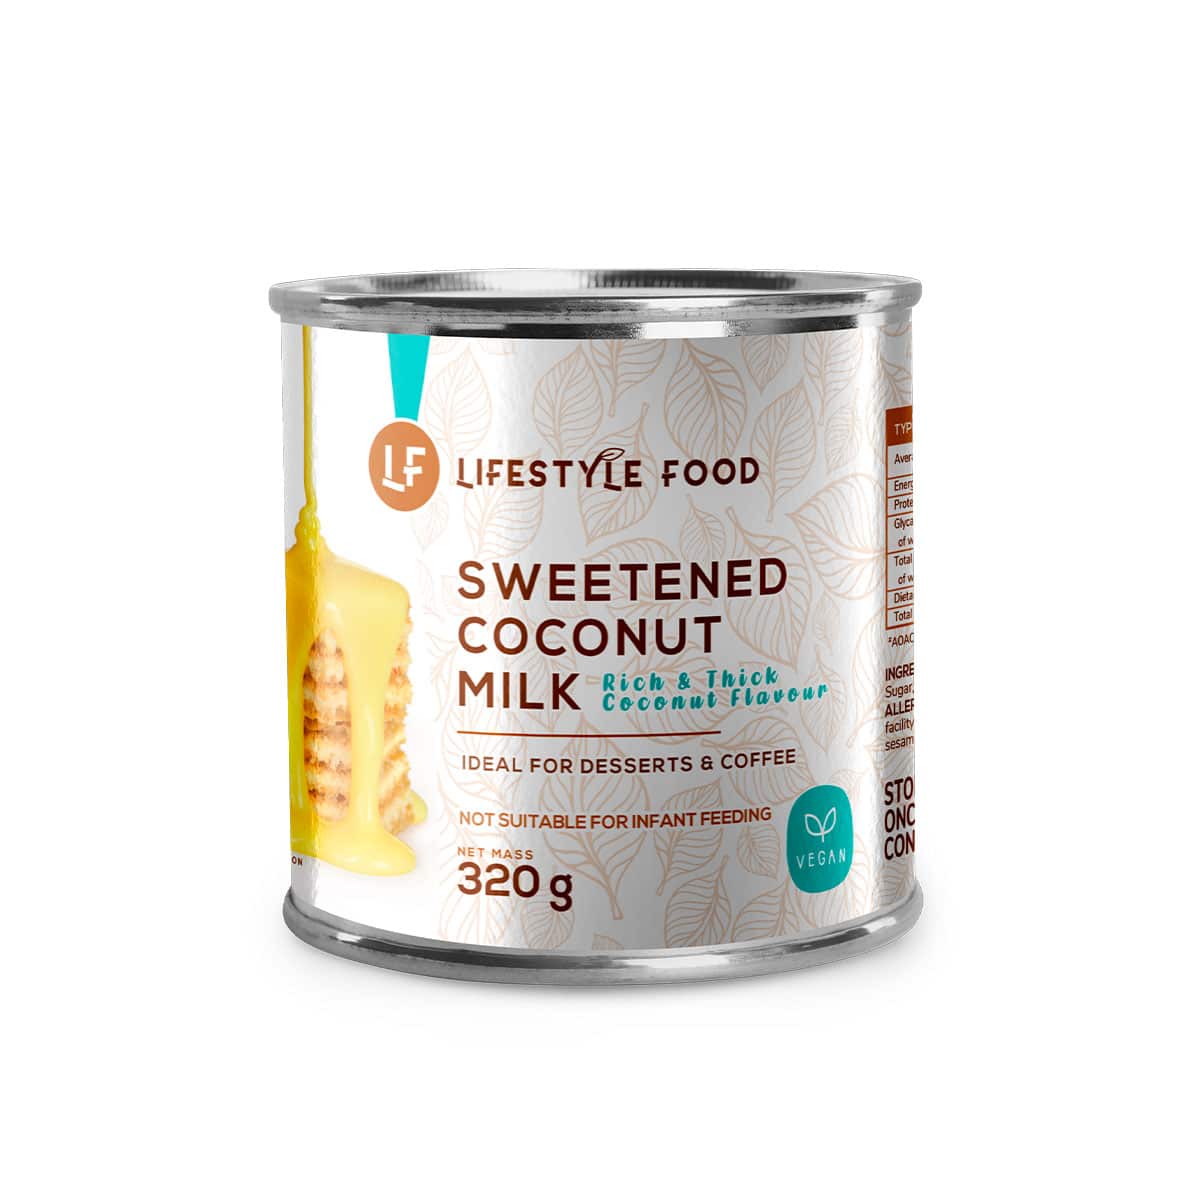 Lifestyle Food Sweetened Coconut Milk - 320g